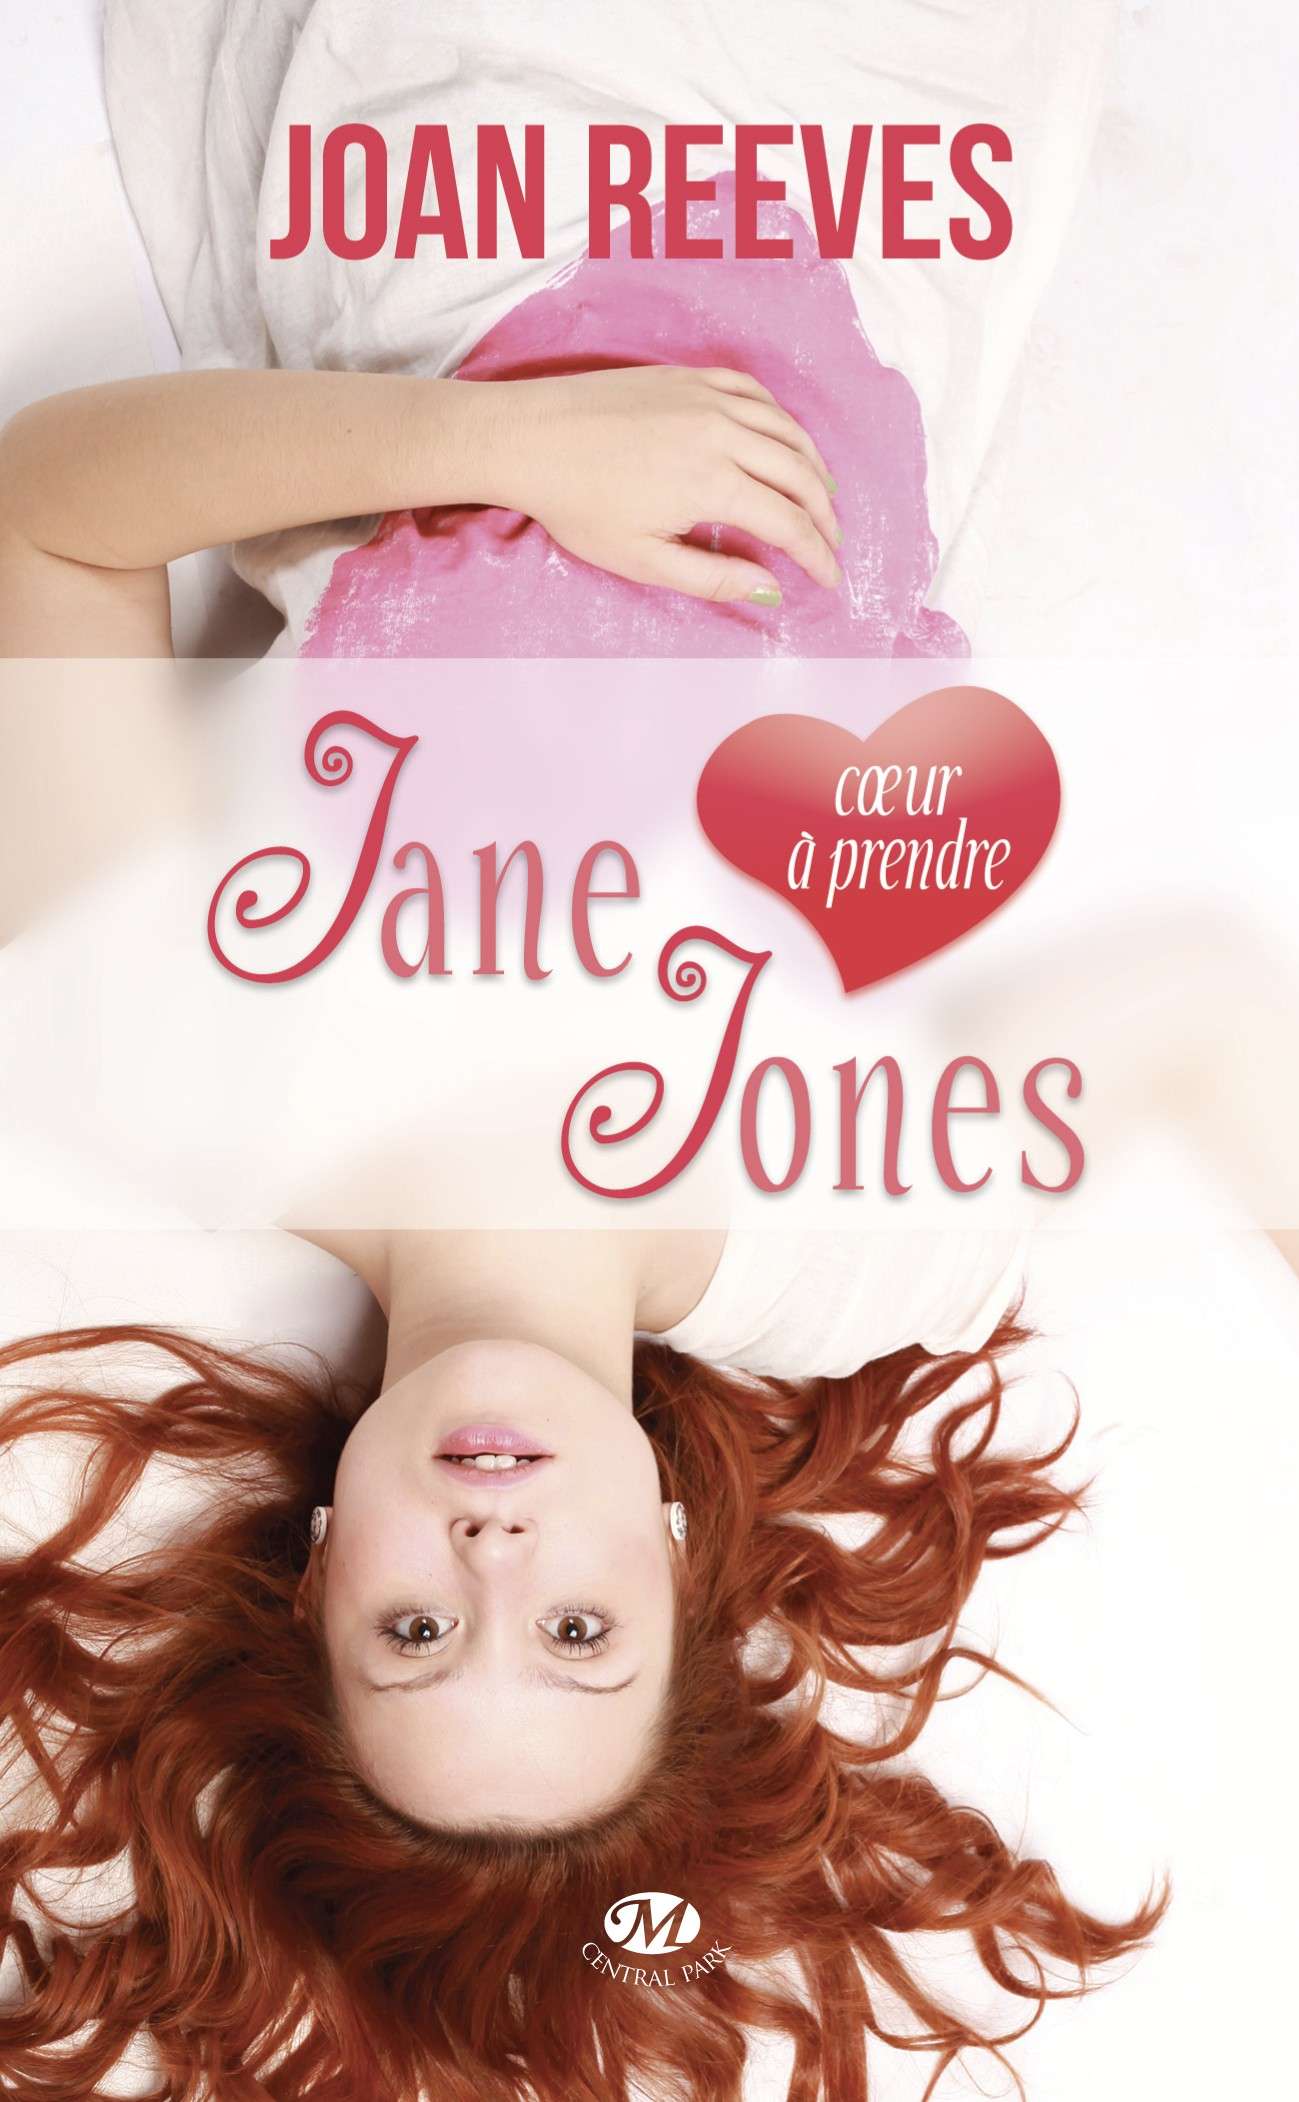 Jane (coeur à prendre) Jones de Joan REEVES